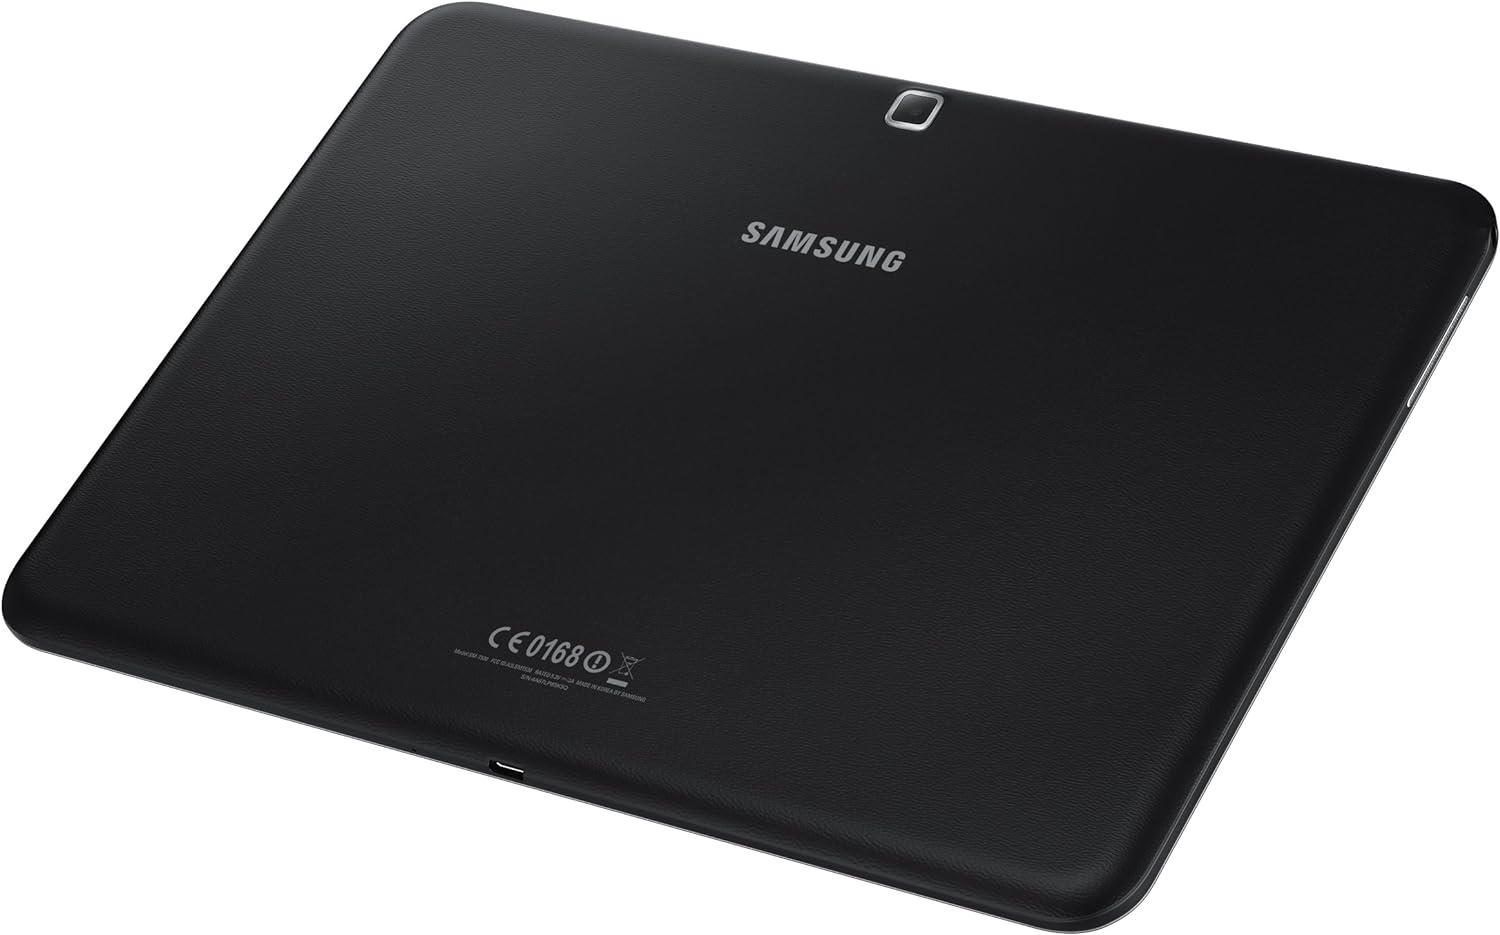 Samsung Galaxy Tab 4 - 10.1'' - 16GB - Black - SM-T530NYKAXAR